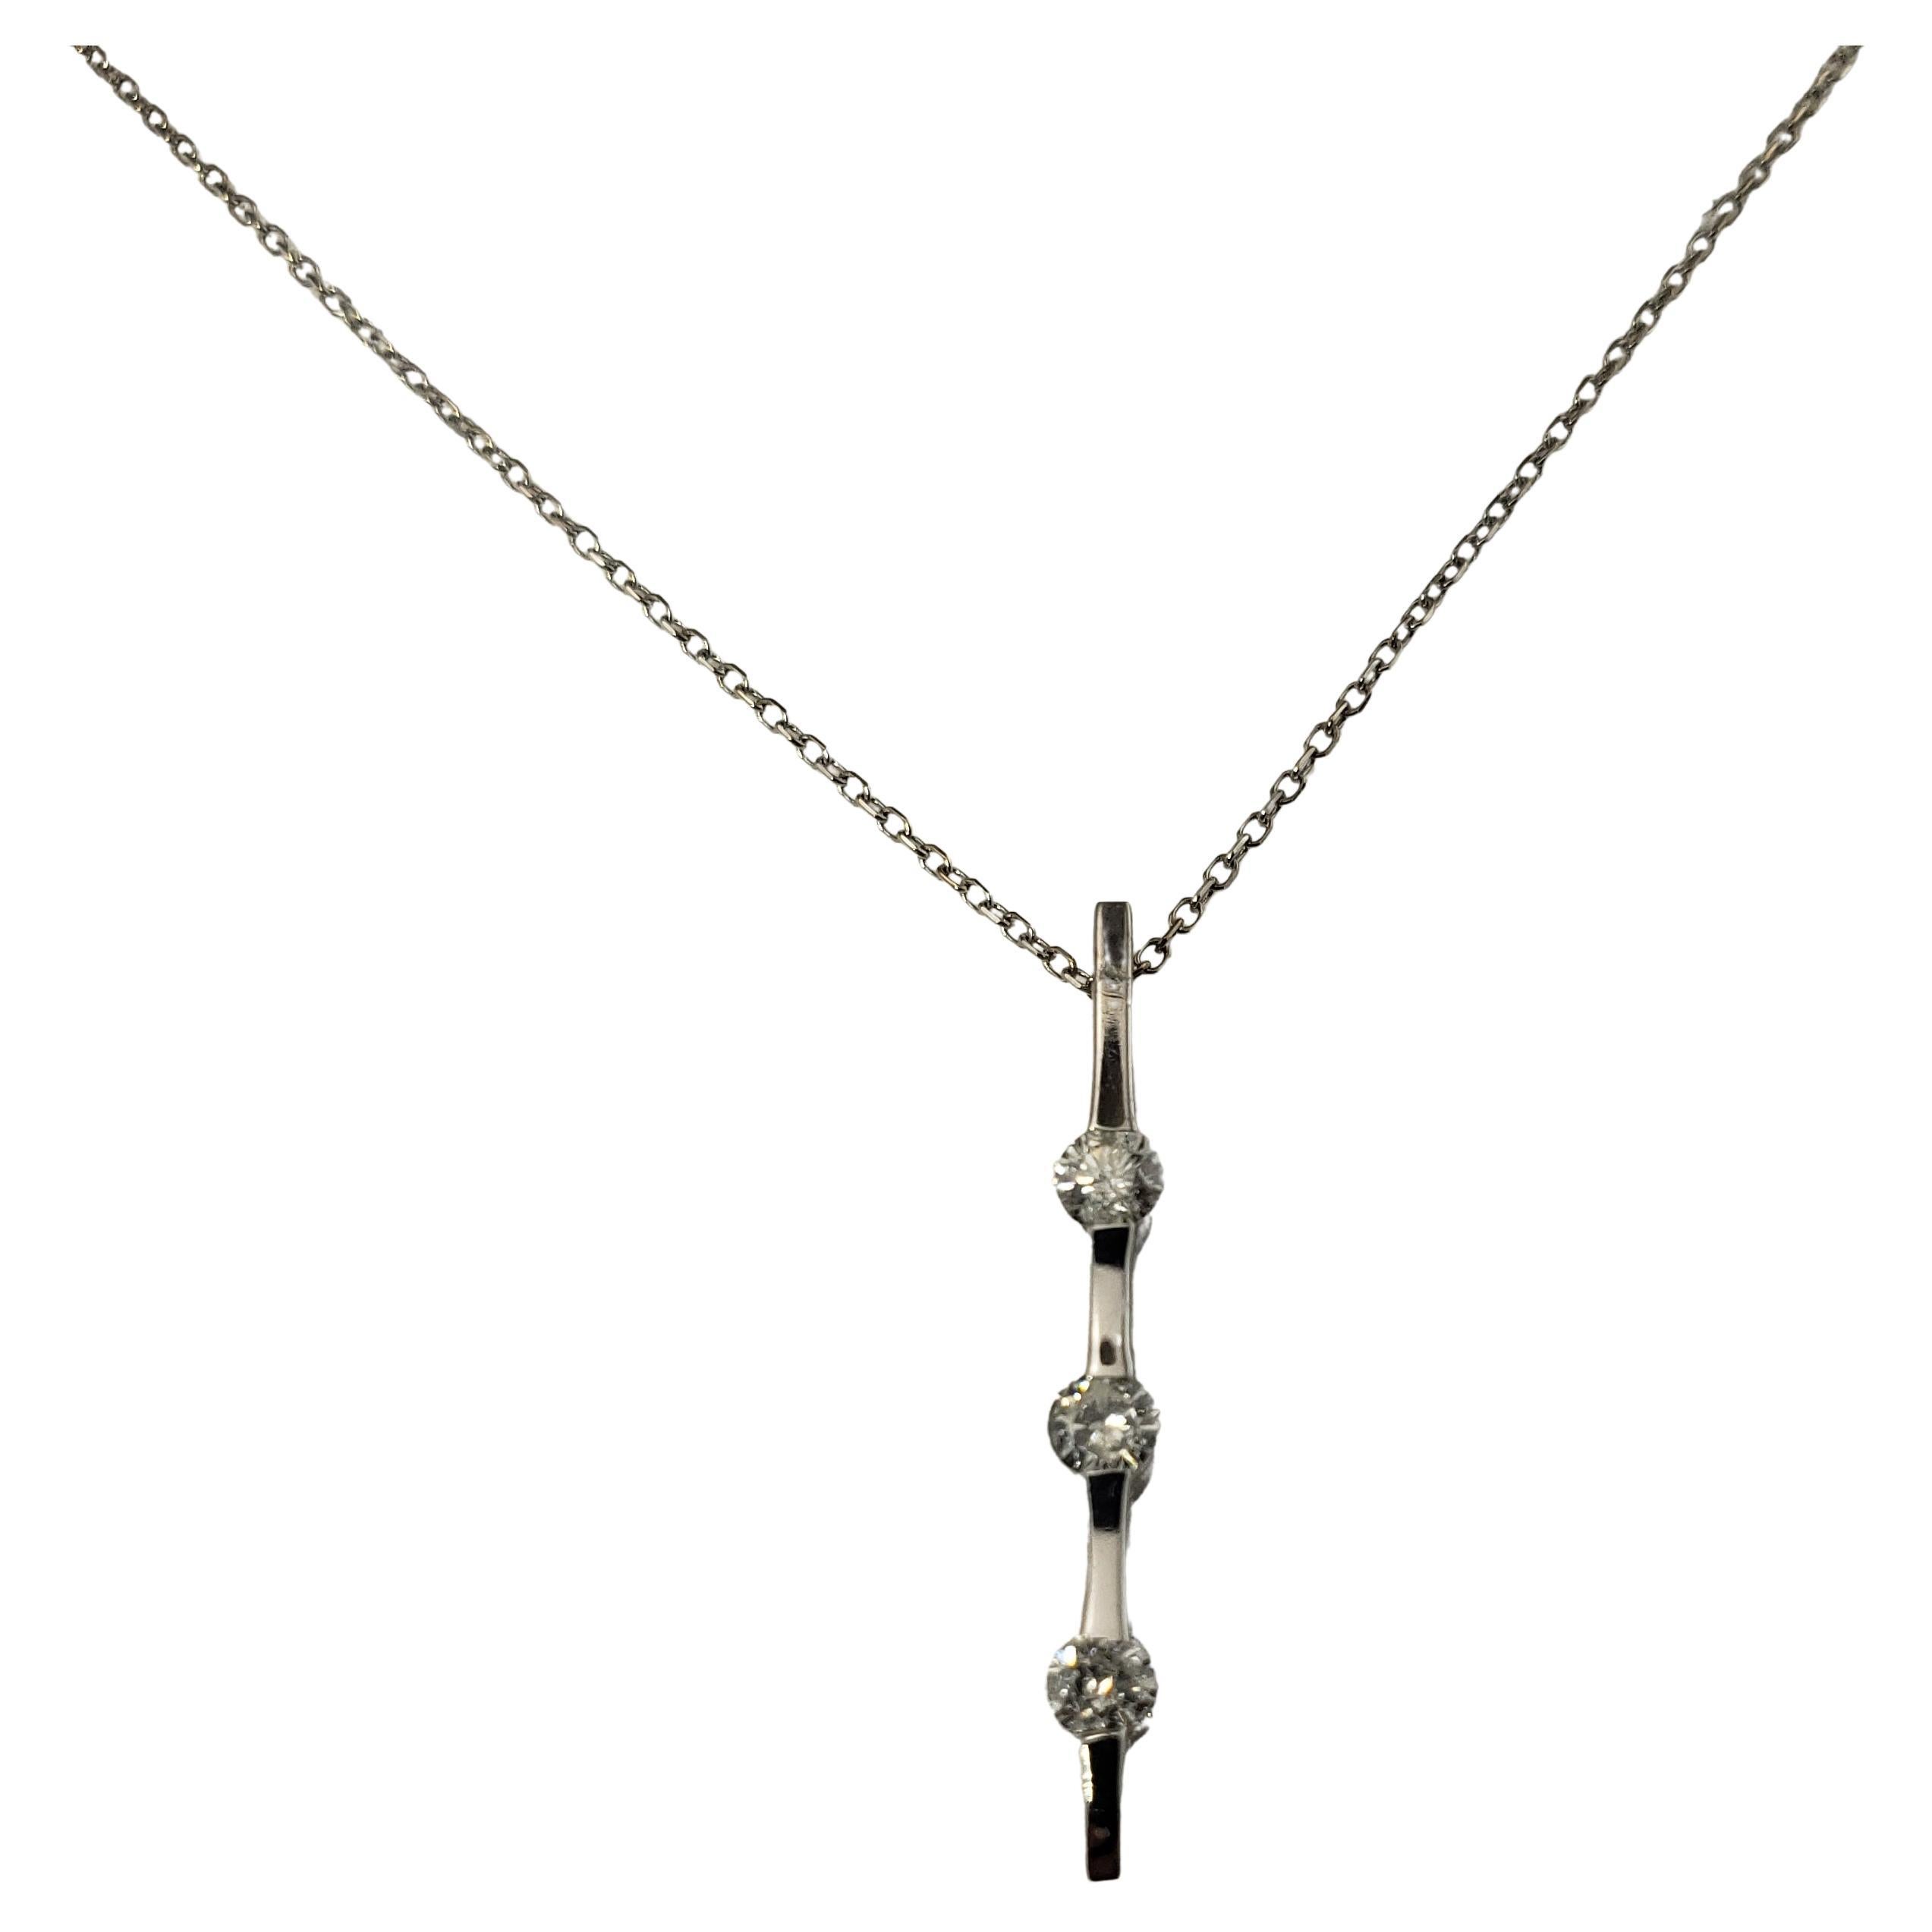  14 Karat White Gold and Diamond Pendant Necklace